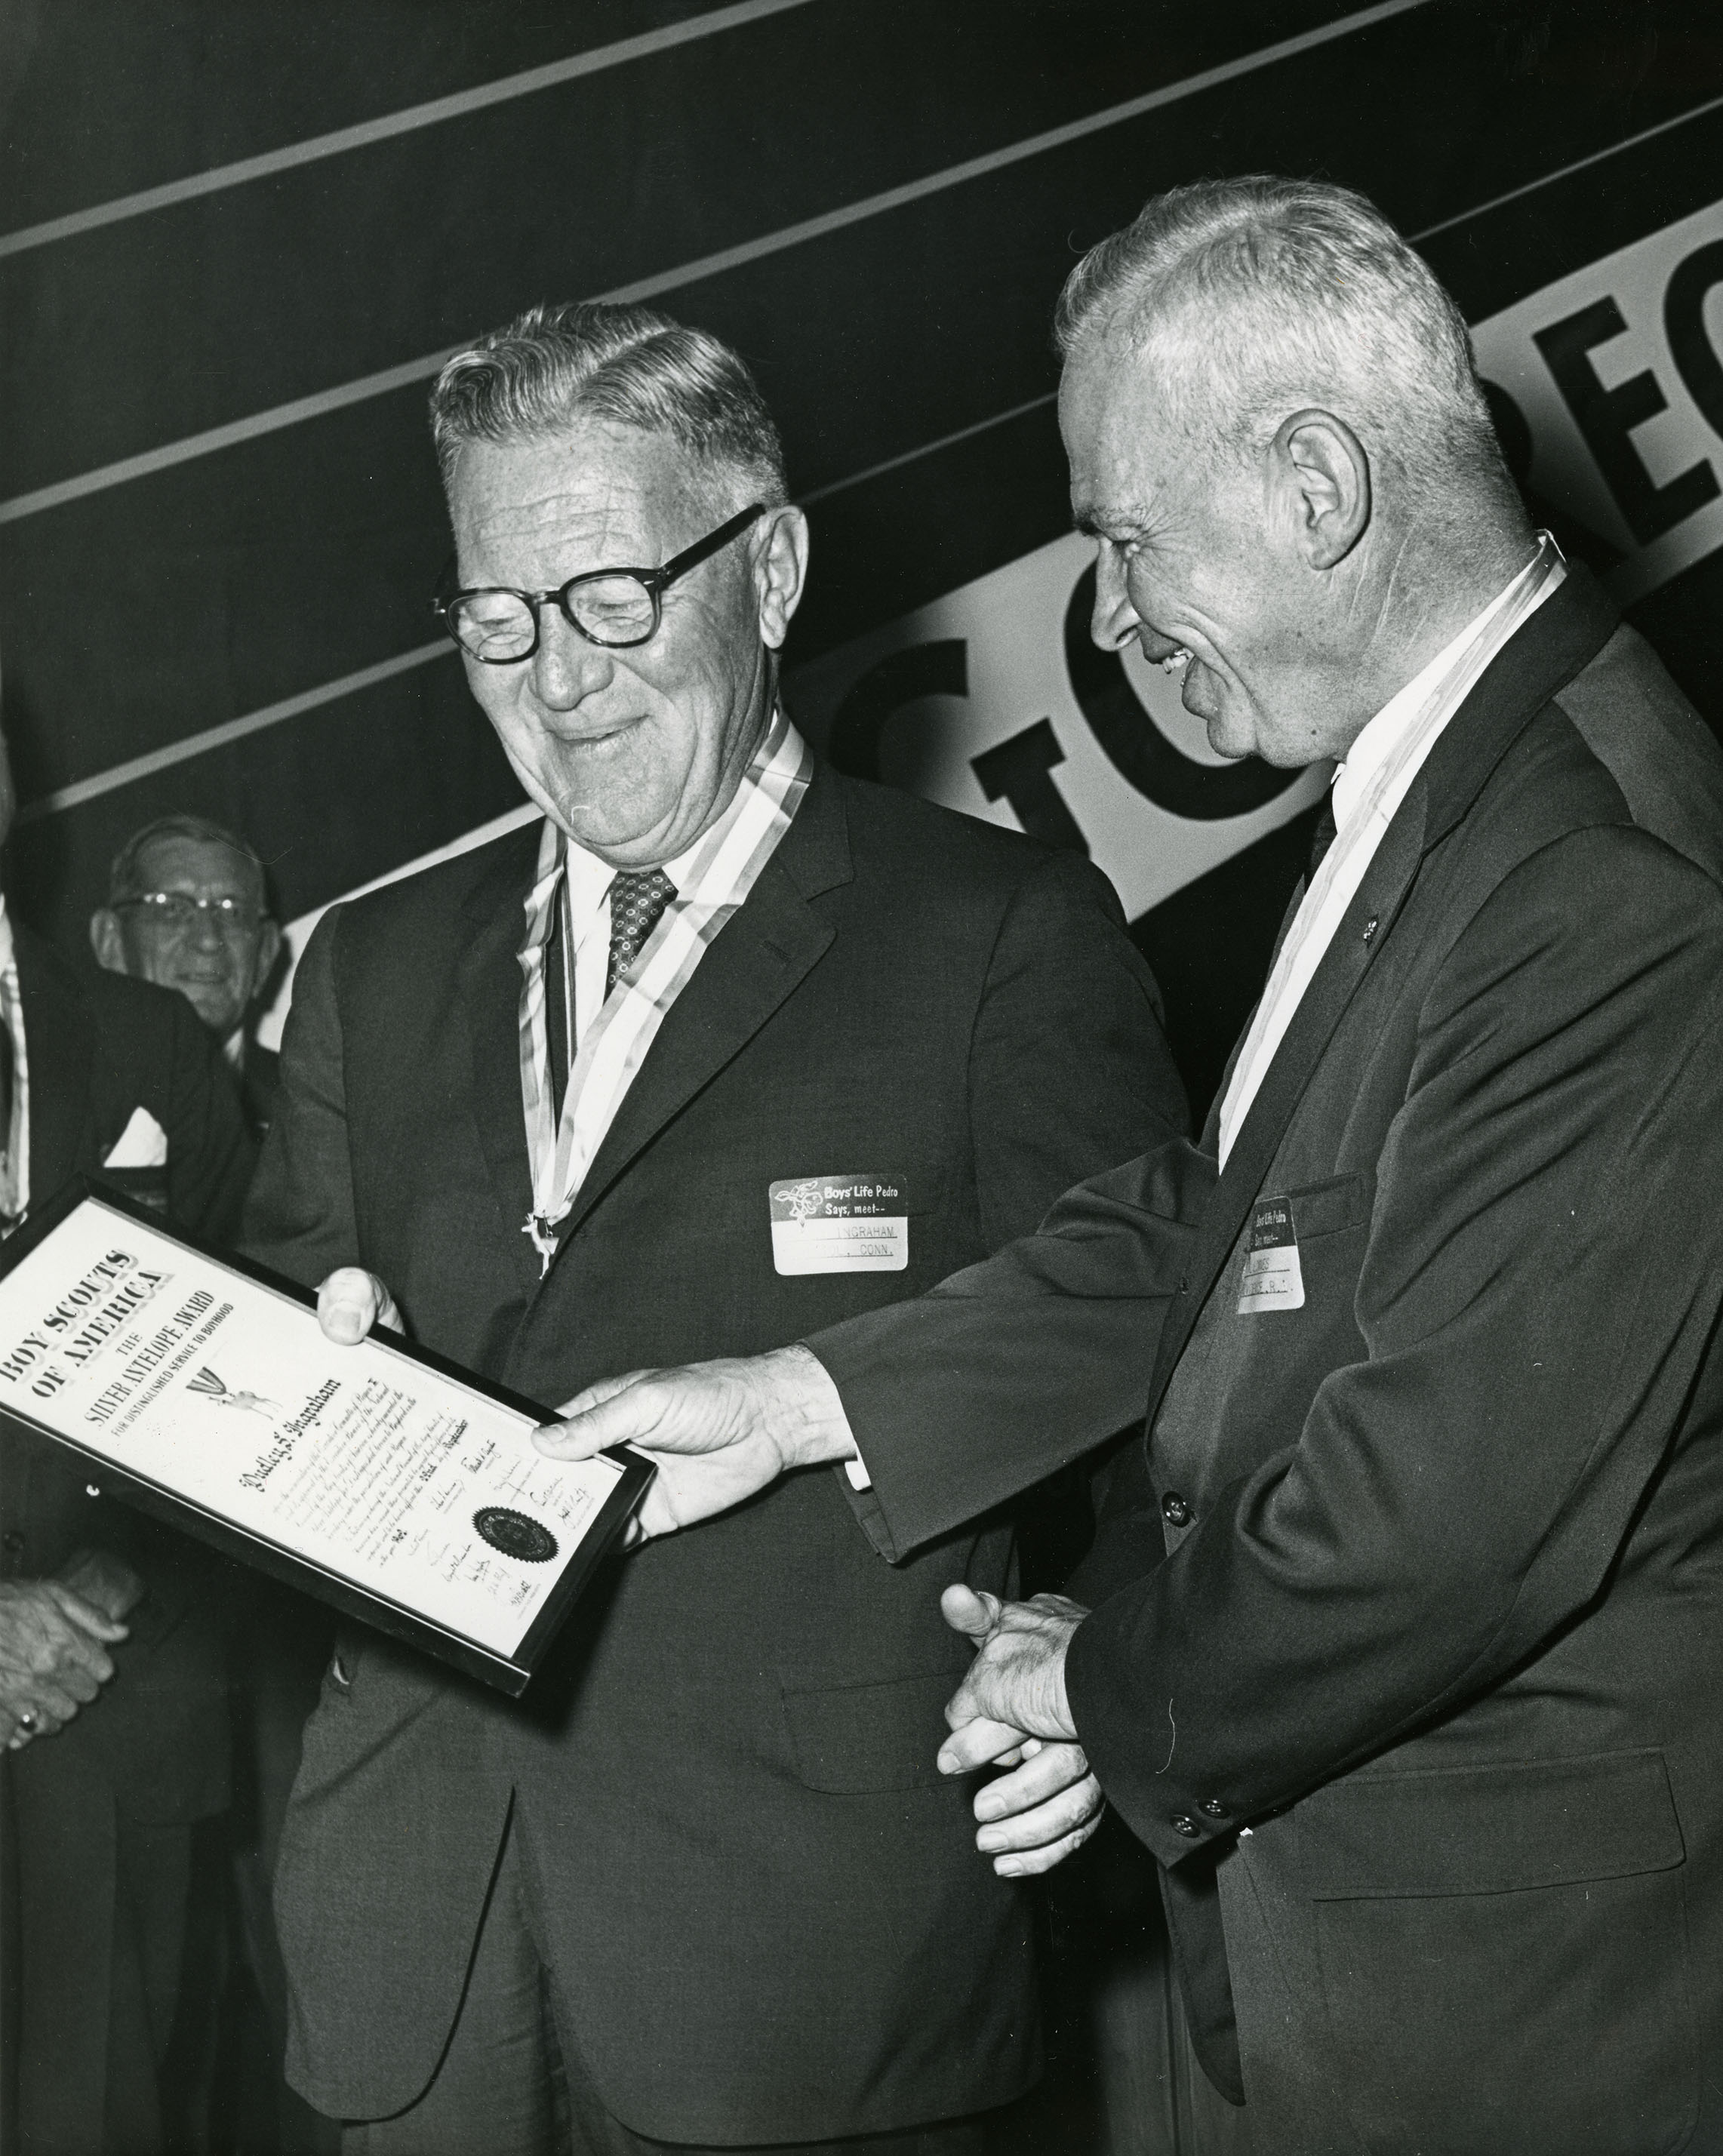 Dudley Ingraham (right), President of the E. Ingraham Company